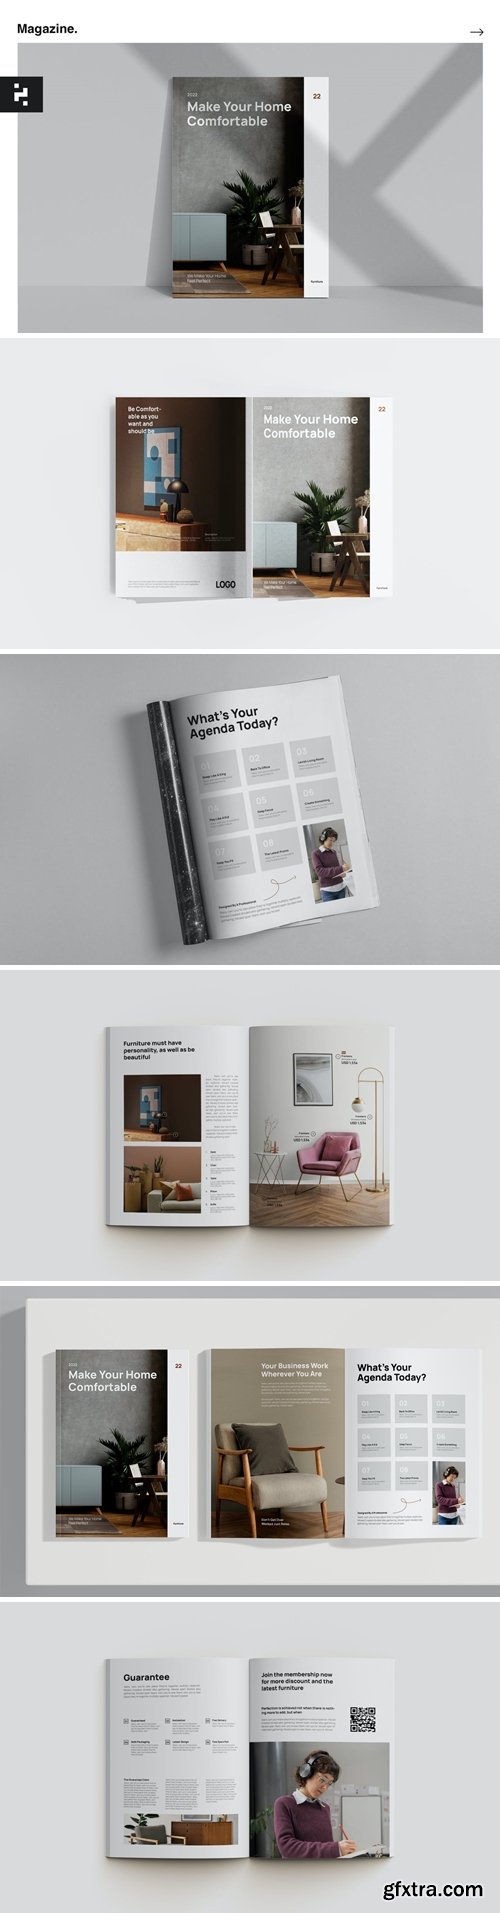 A4 Furniture Catalog Magazine Template » GFxtra